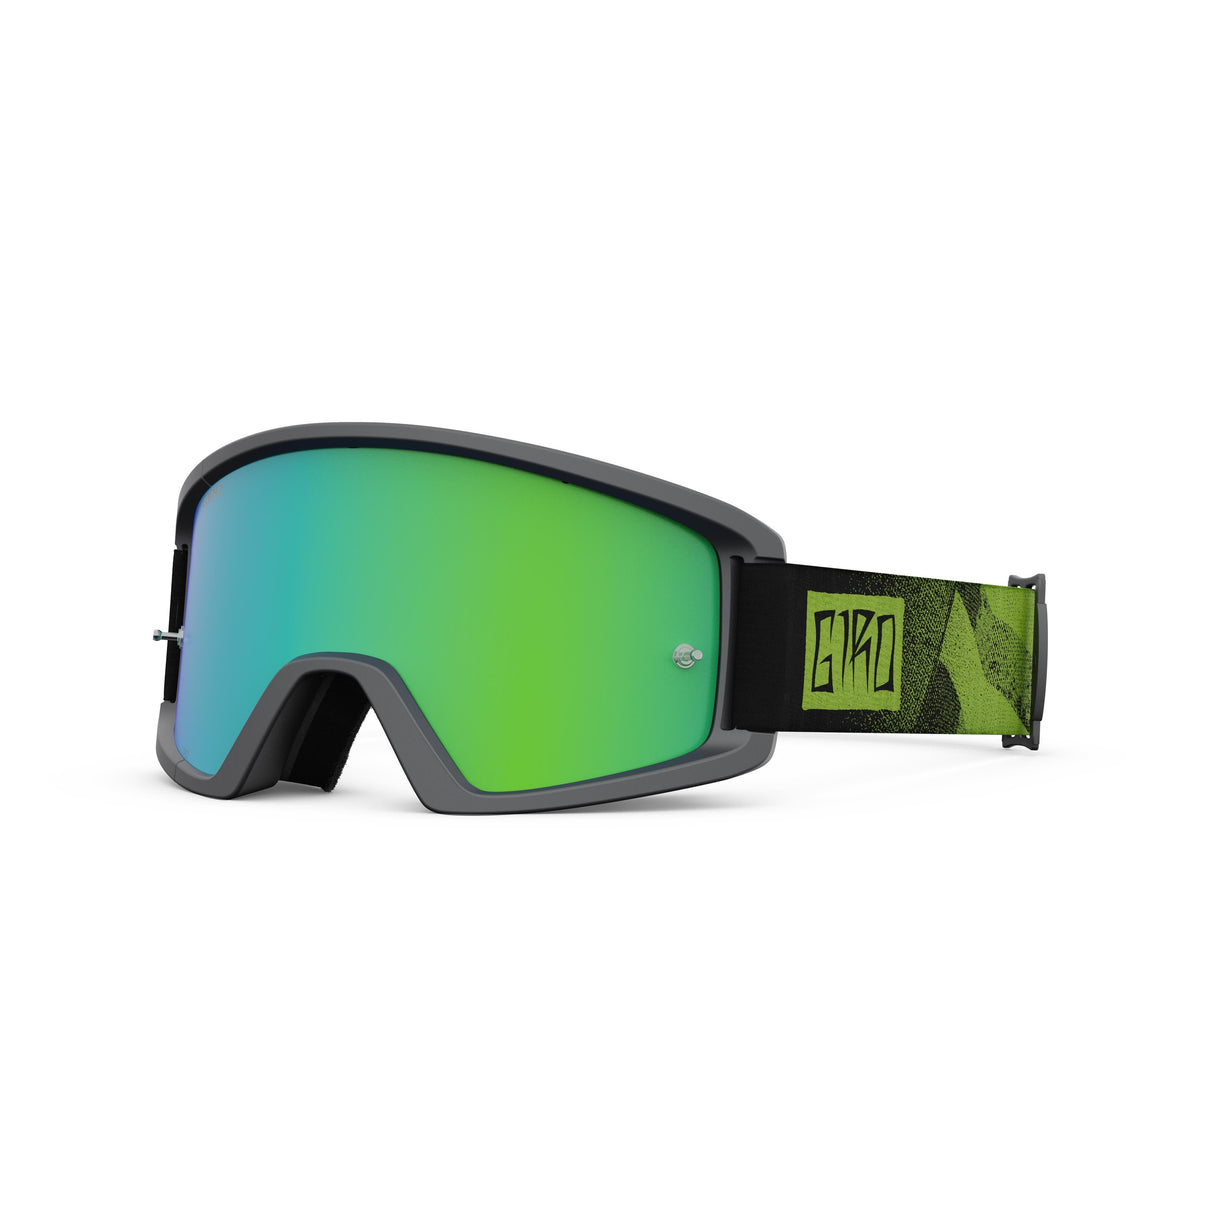 Giro Tazz Mtb Goggles 2021: Black/Anodized Lime  Loden Green/Clear Adult